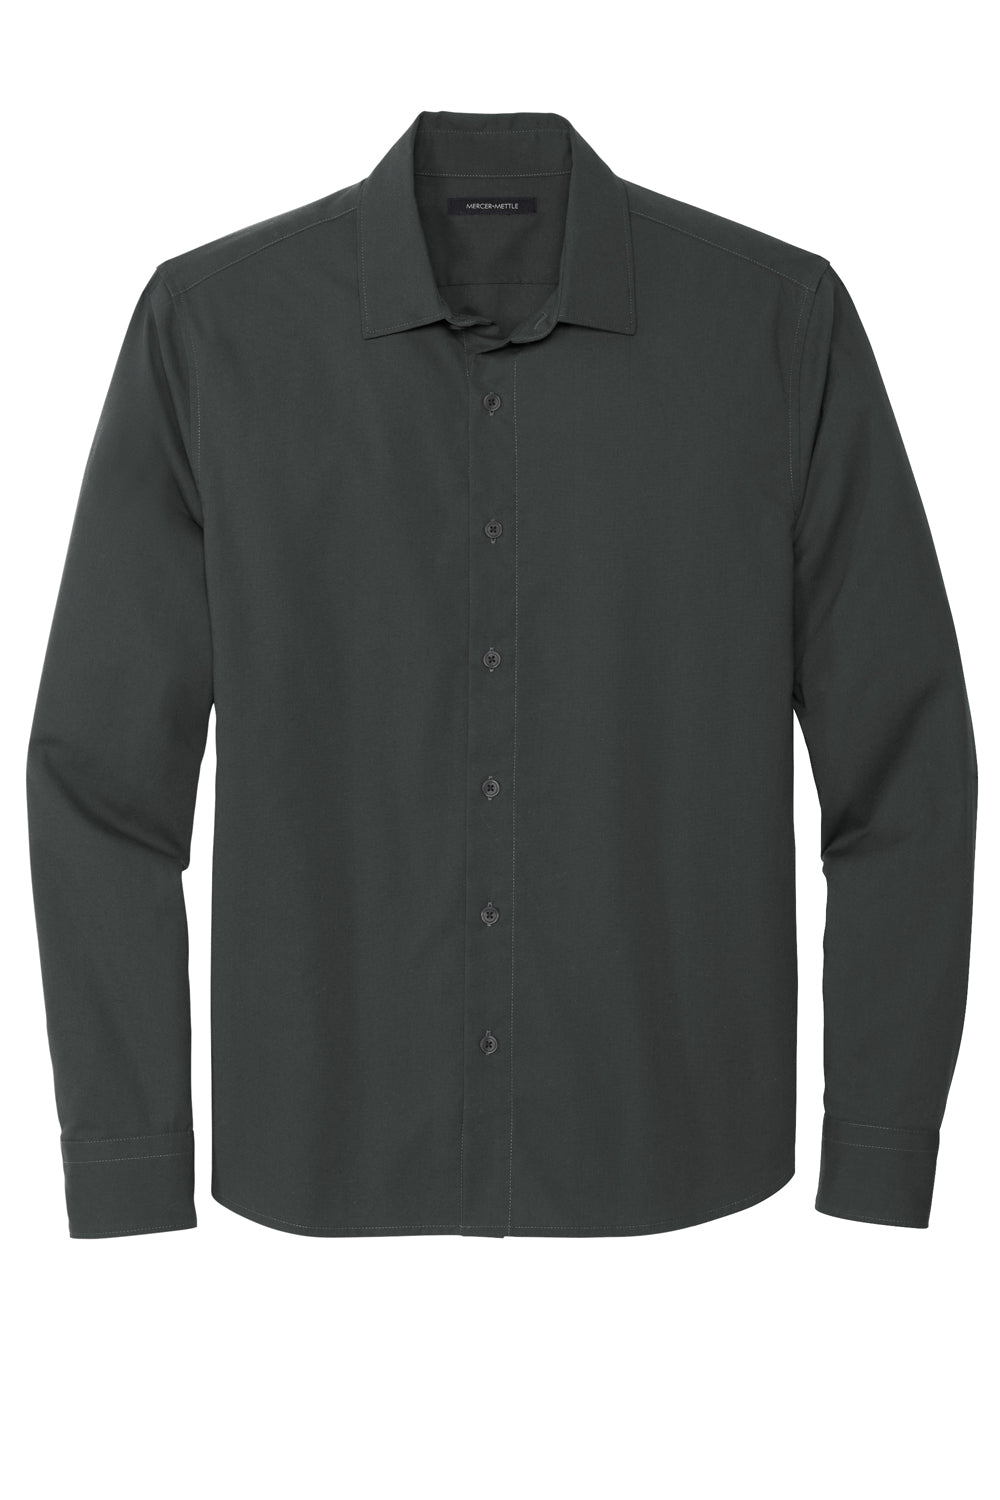 Mercer+Mettle MM2000 Stretch Woven Long Sleeve Button Down Shirt Anchor Grey Flat Front